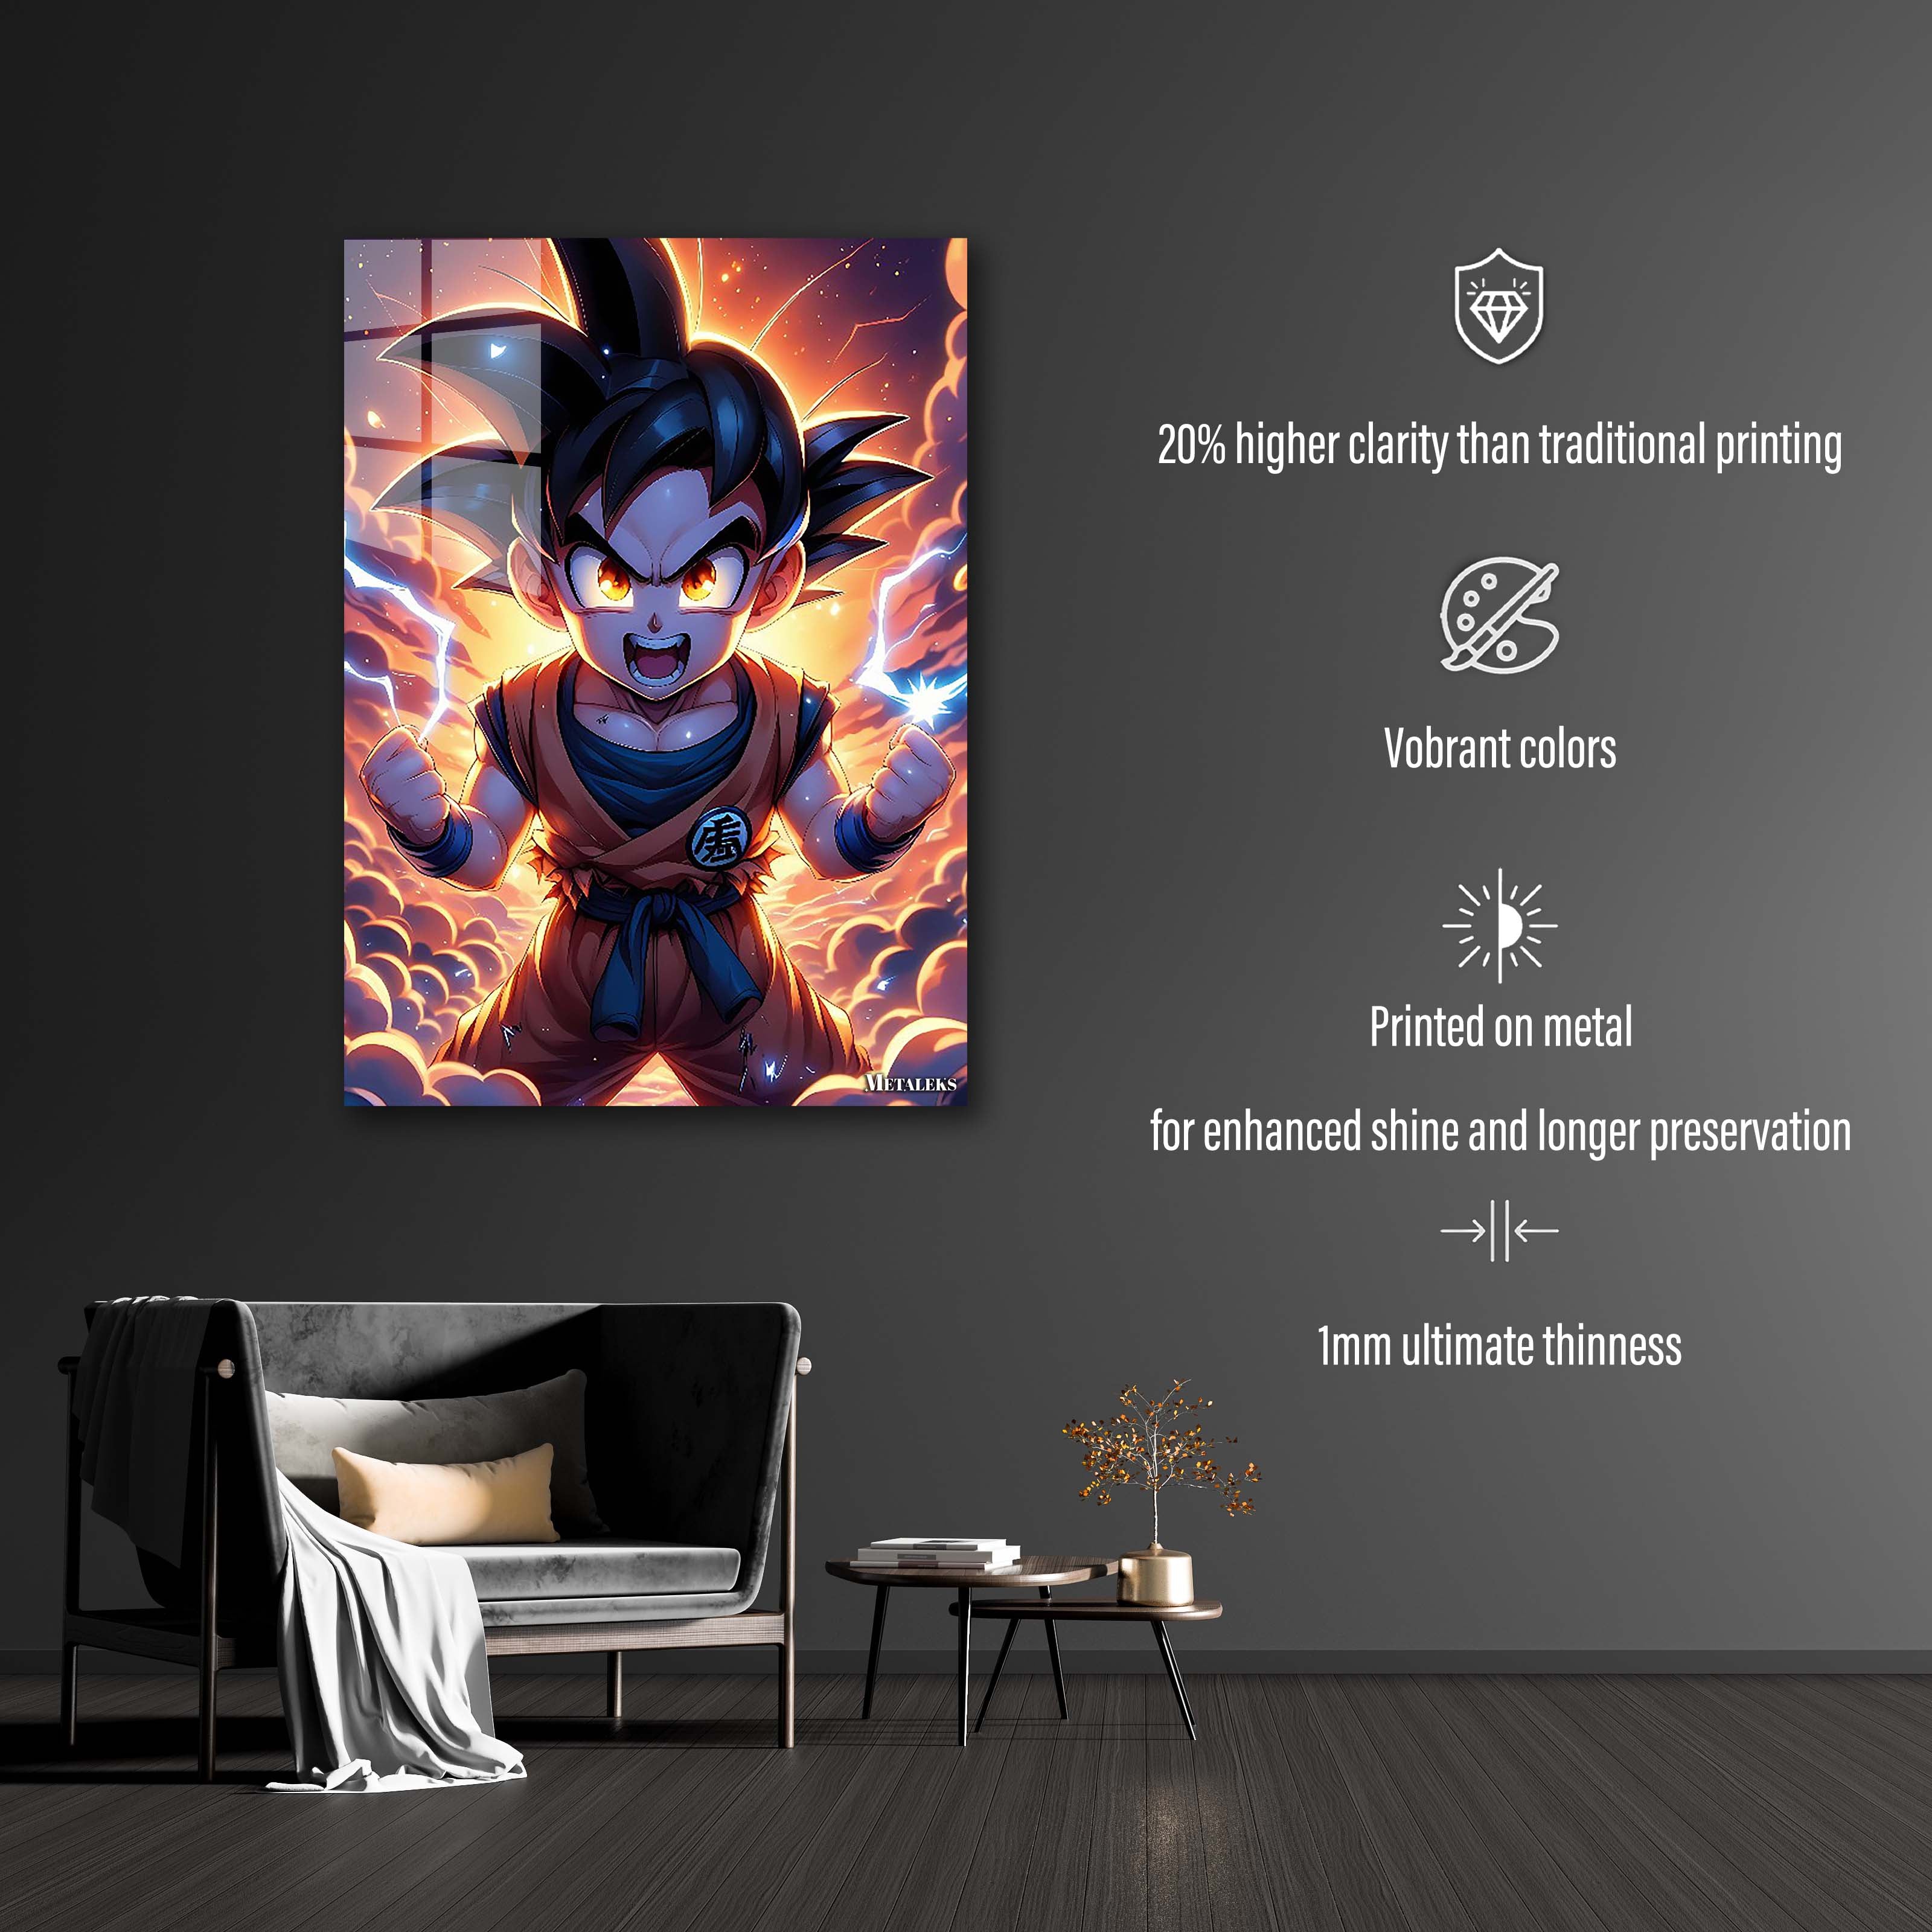 Son Goku the Legendary Warrior-designed by @Lucifer Art2092